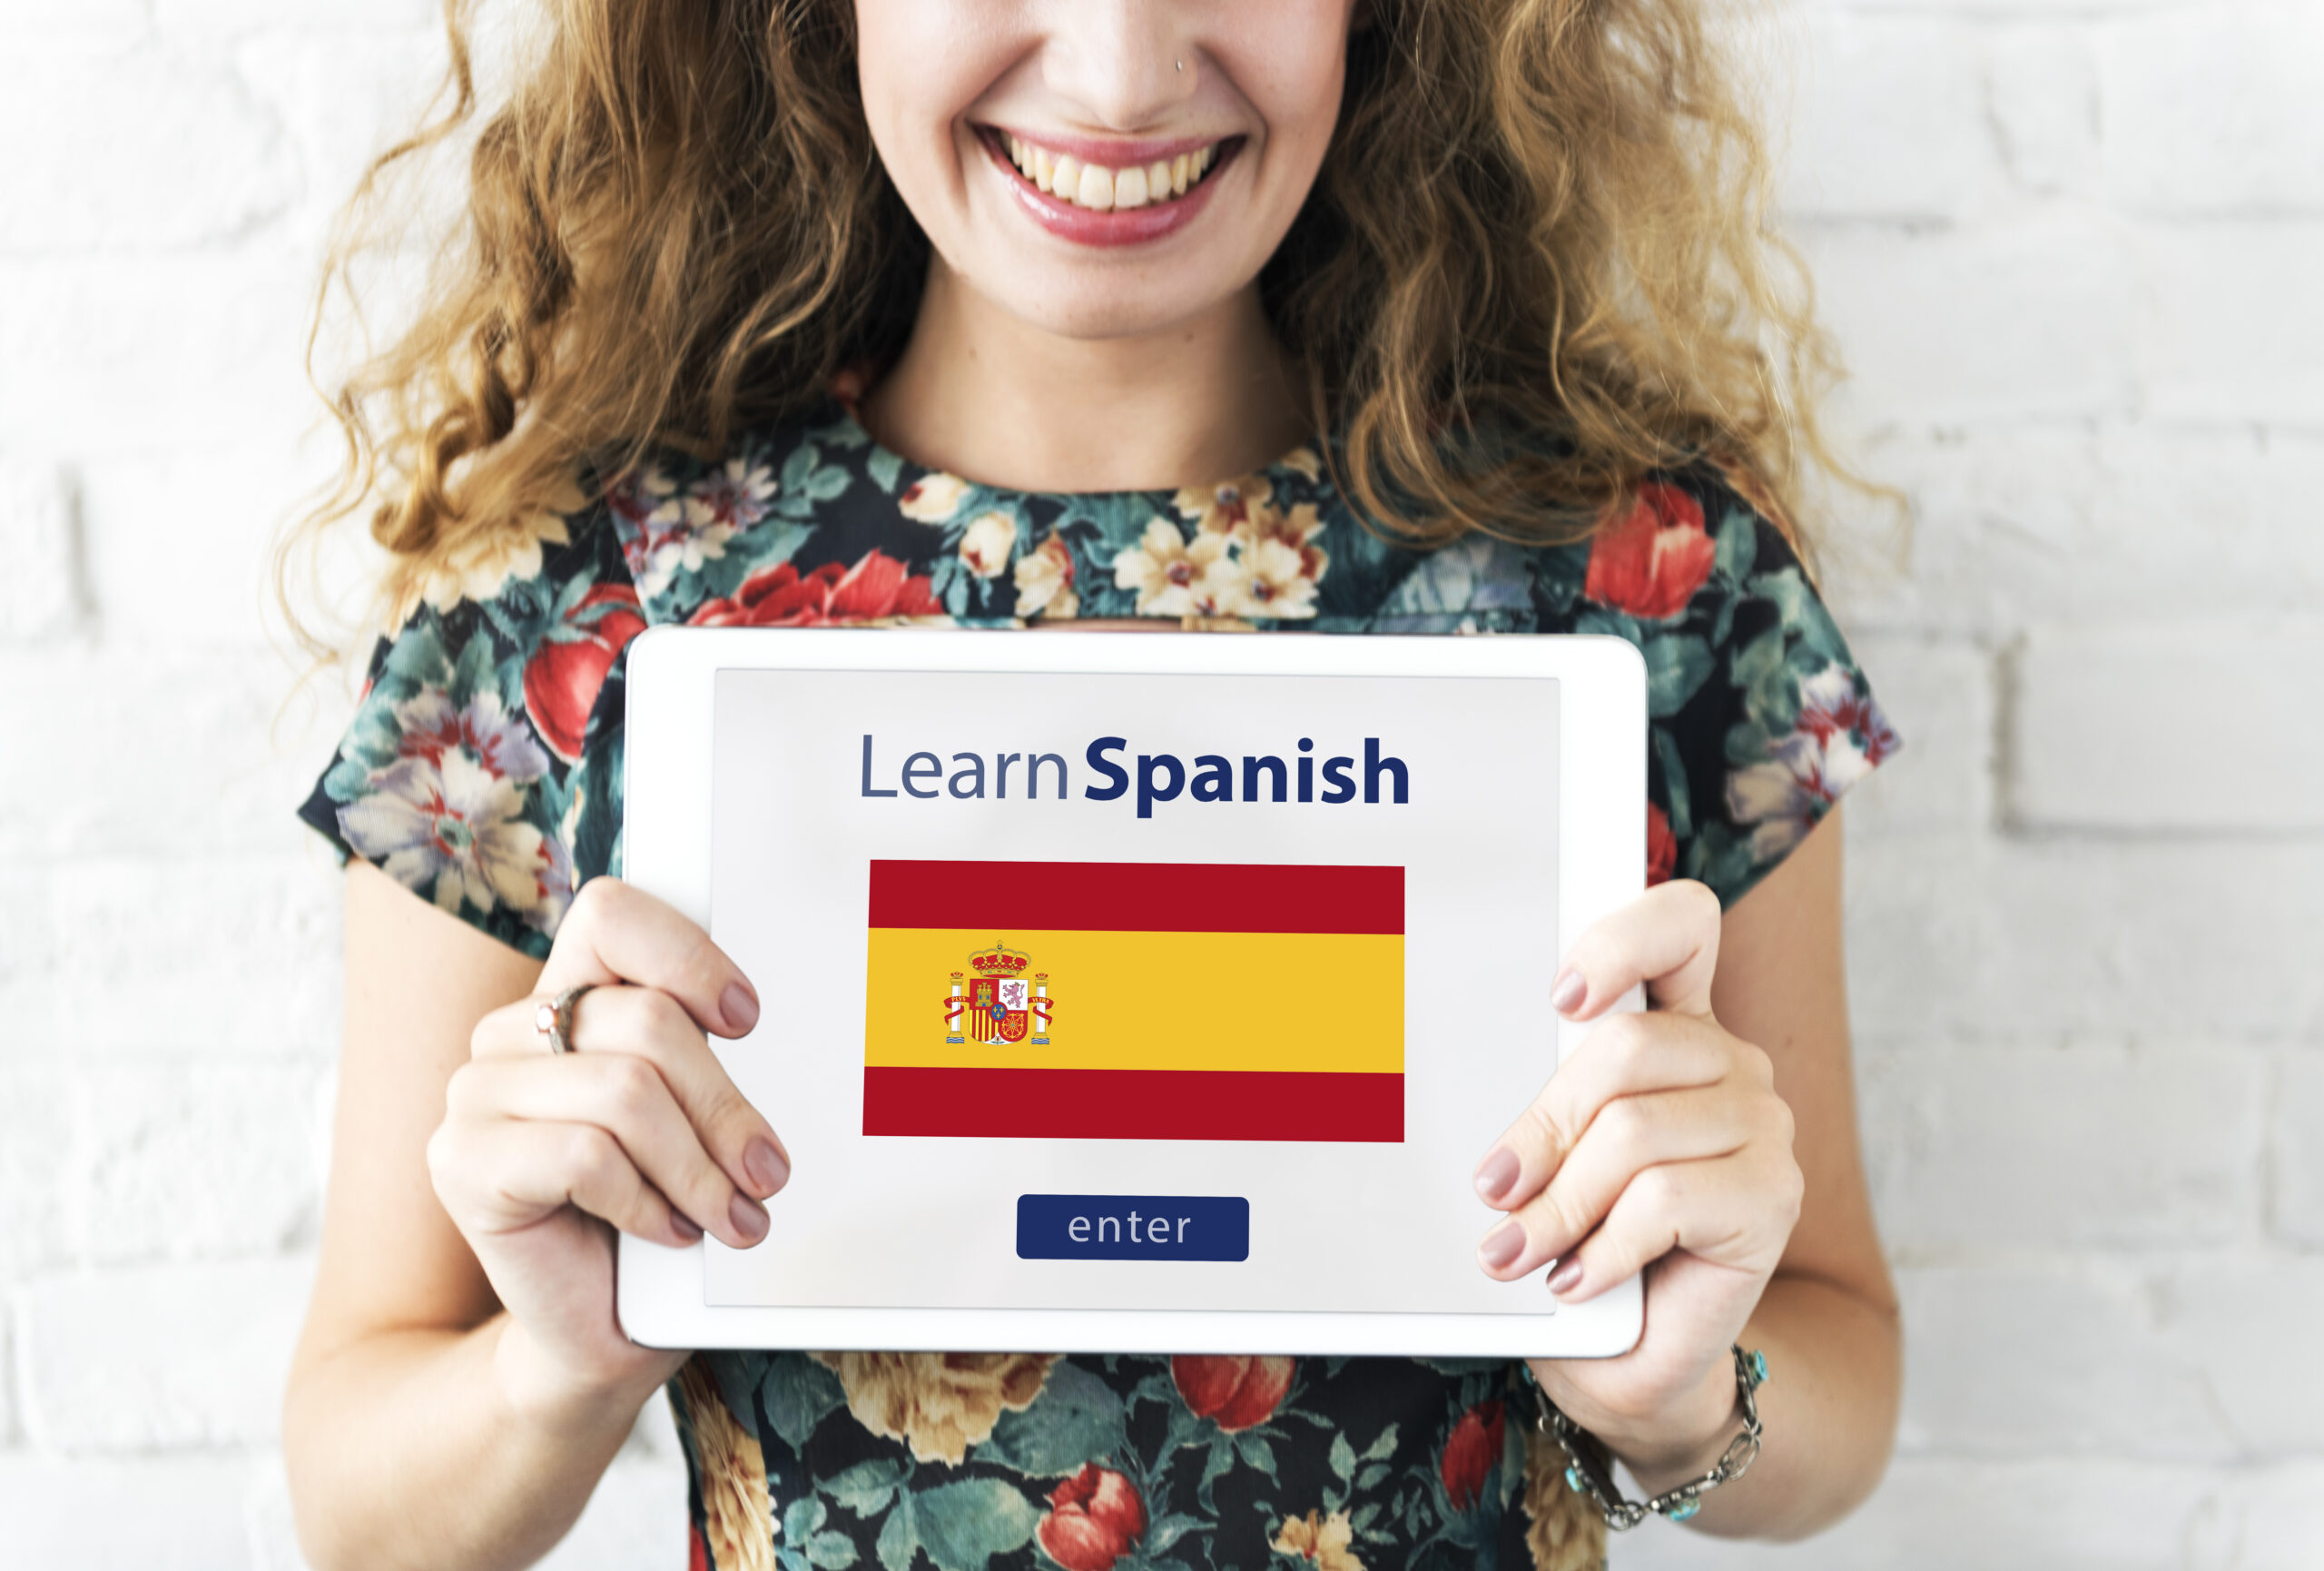 Should you study Spanish?